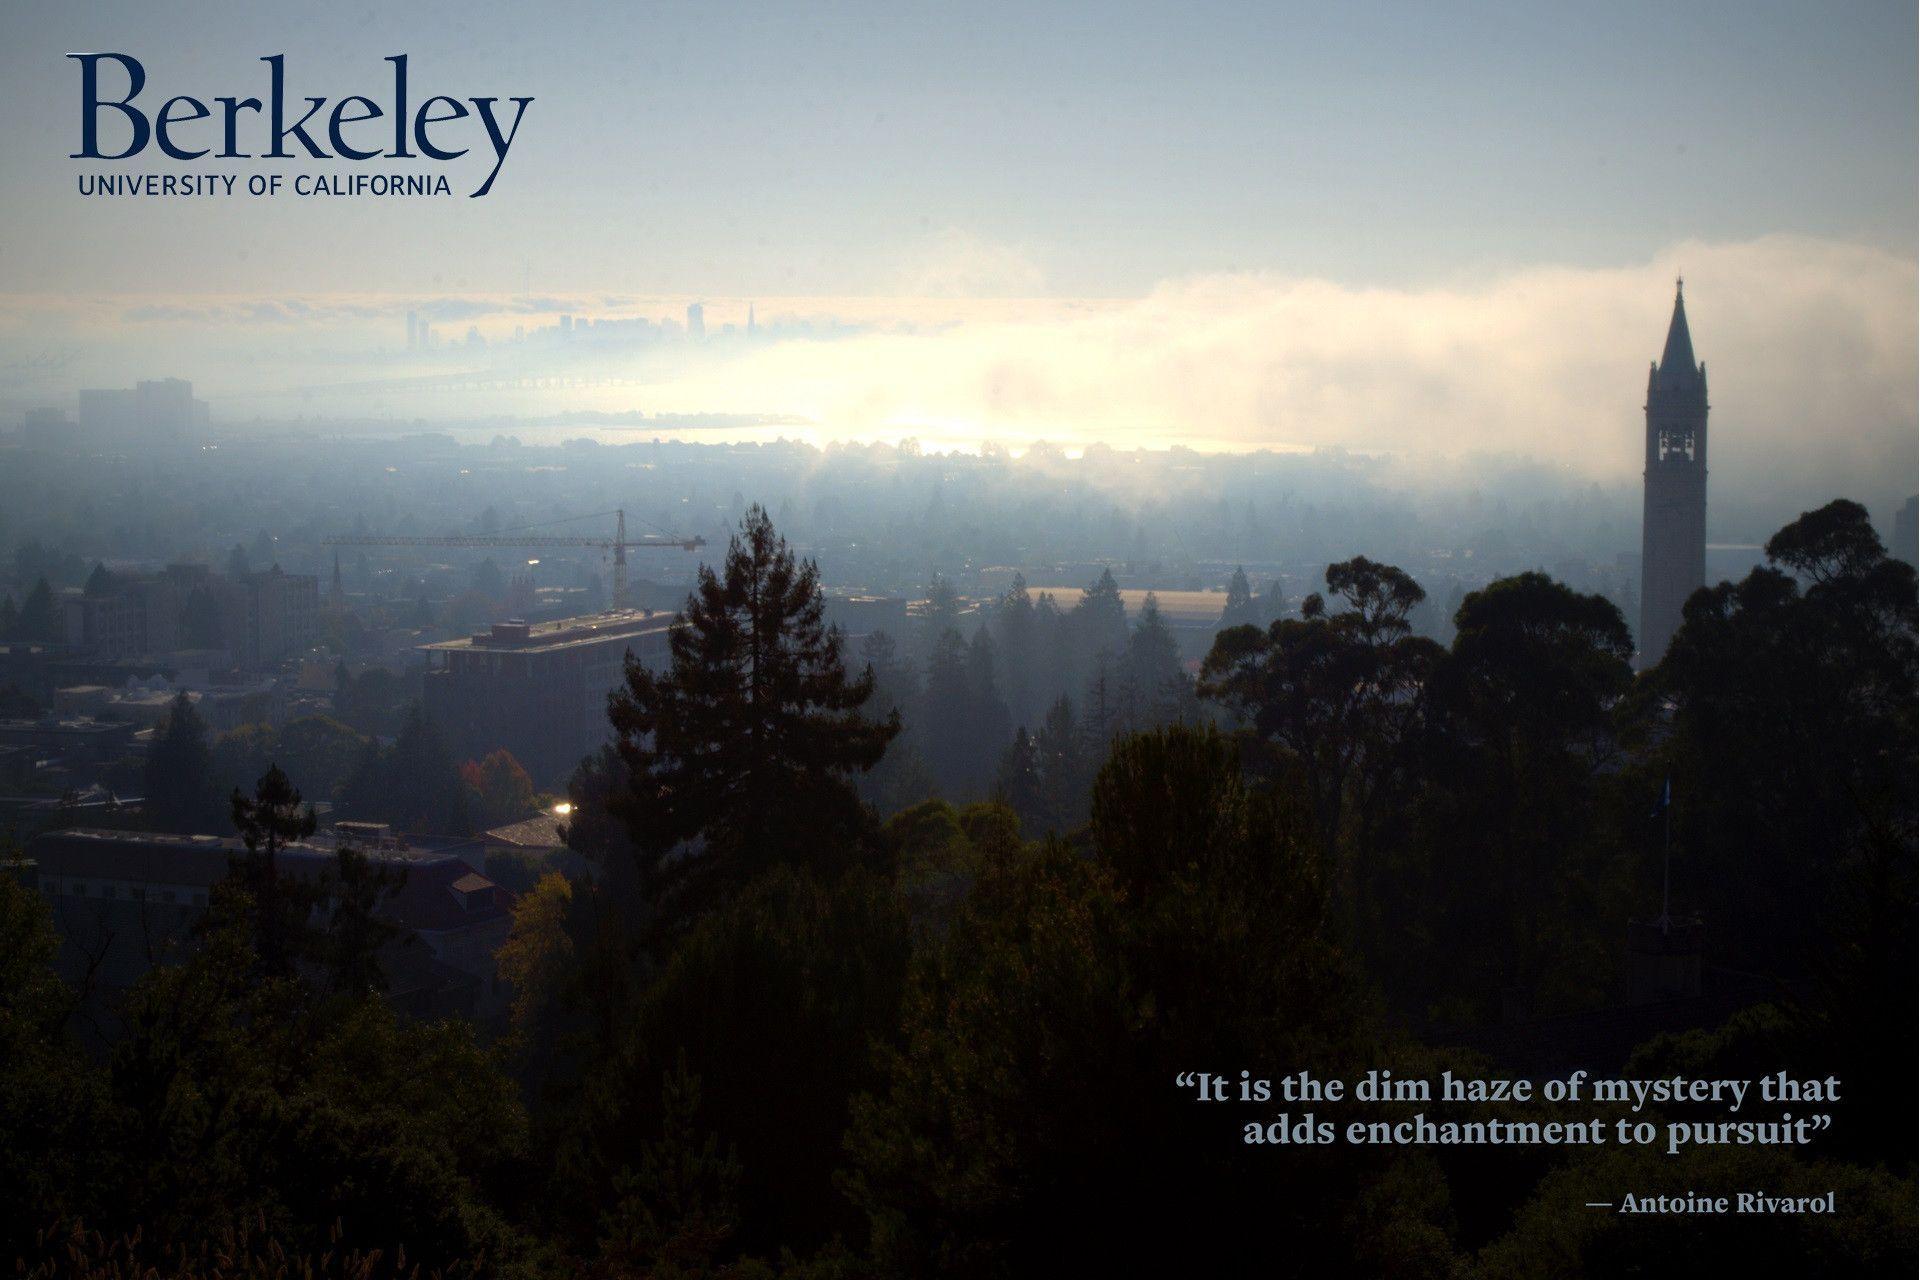 Wallpaper Downloads. UC Berkeley Office of Undergraduate Admissions